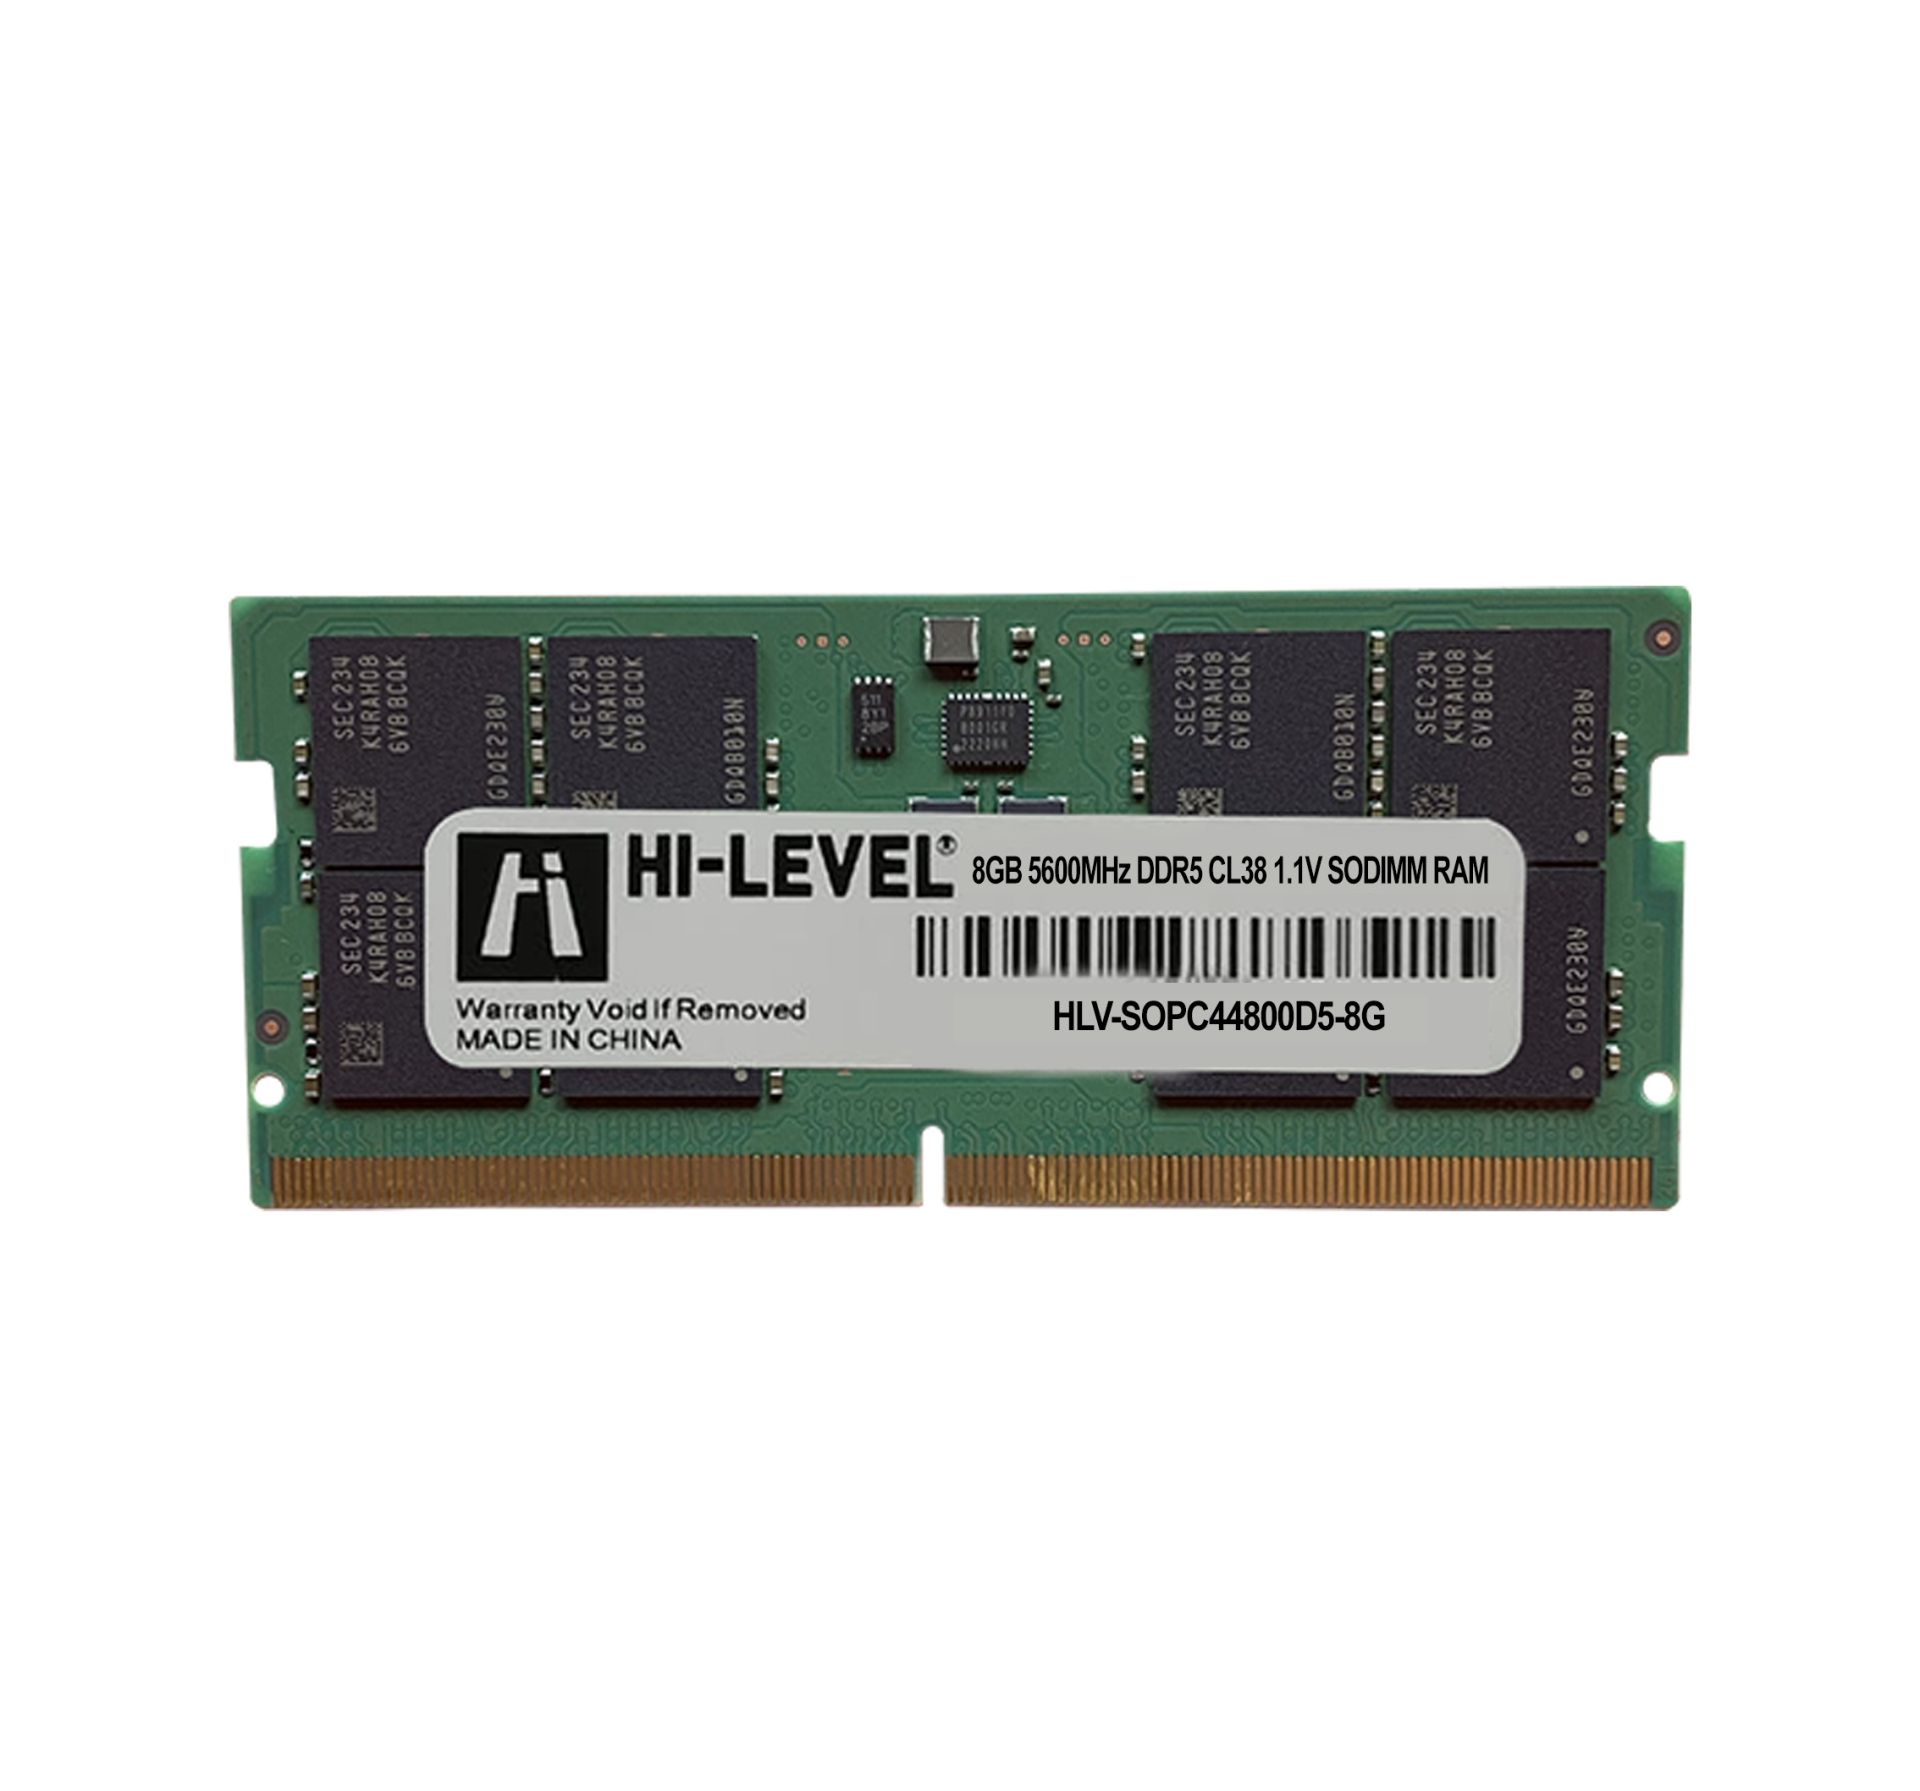 HI-LEVEL 8GB 5600MHz DDR5 CL38 1.1V SODIMM RAM